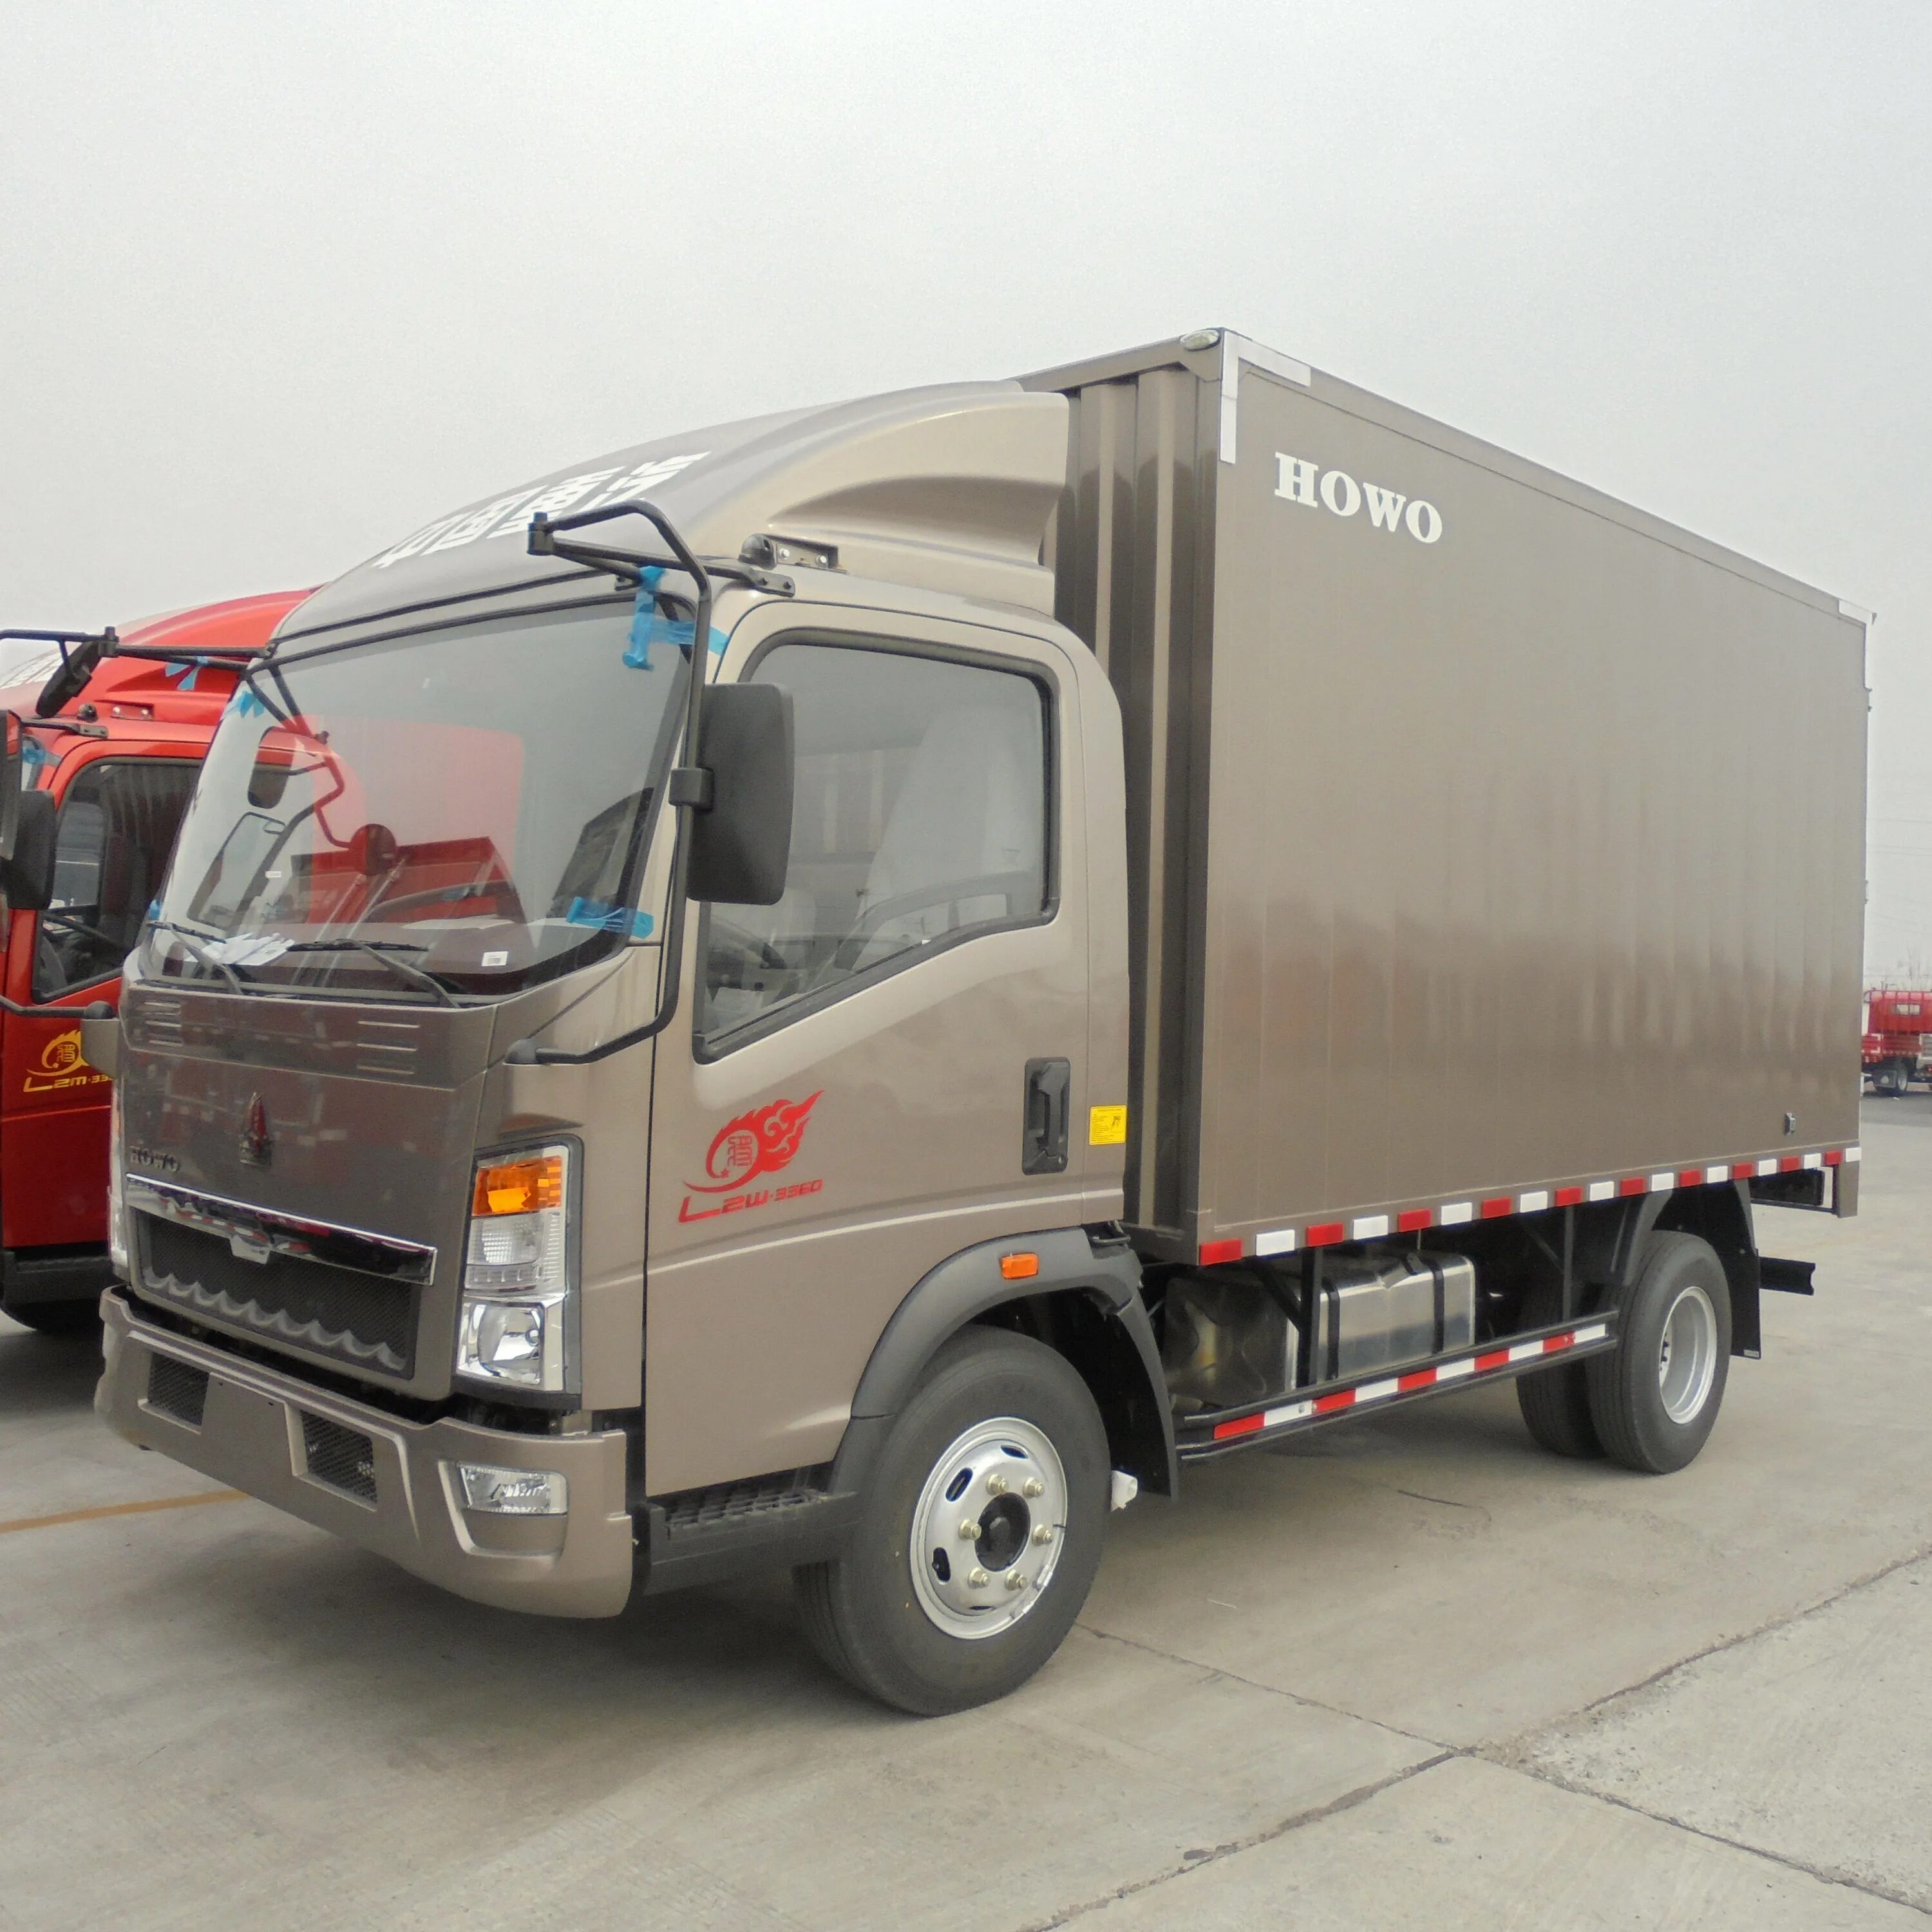 Купить грузовик категории в. Dongfeng грузовик 5тонн. HOWO 10 тонн 4x2. Dongfeng грузовой фургон 10 тонн. Dongfeng 2.5 грузовой.